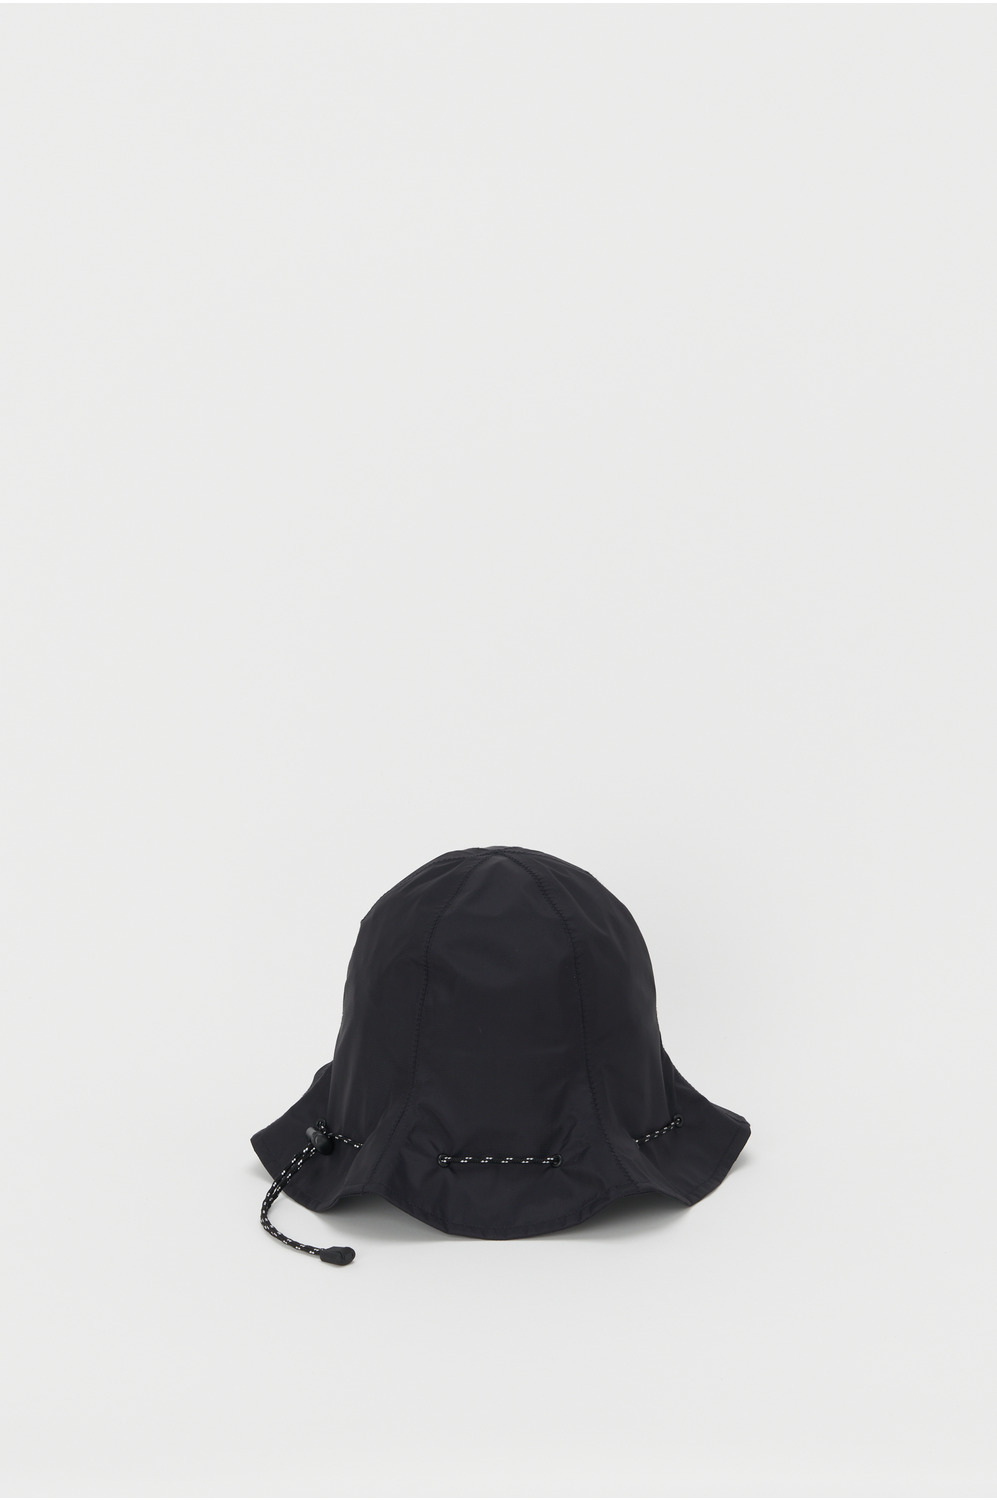 nylon kinchaku hat 詳細画像 black 1